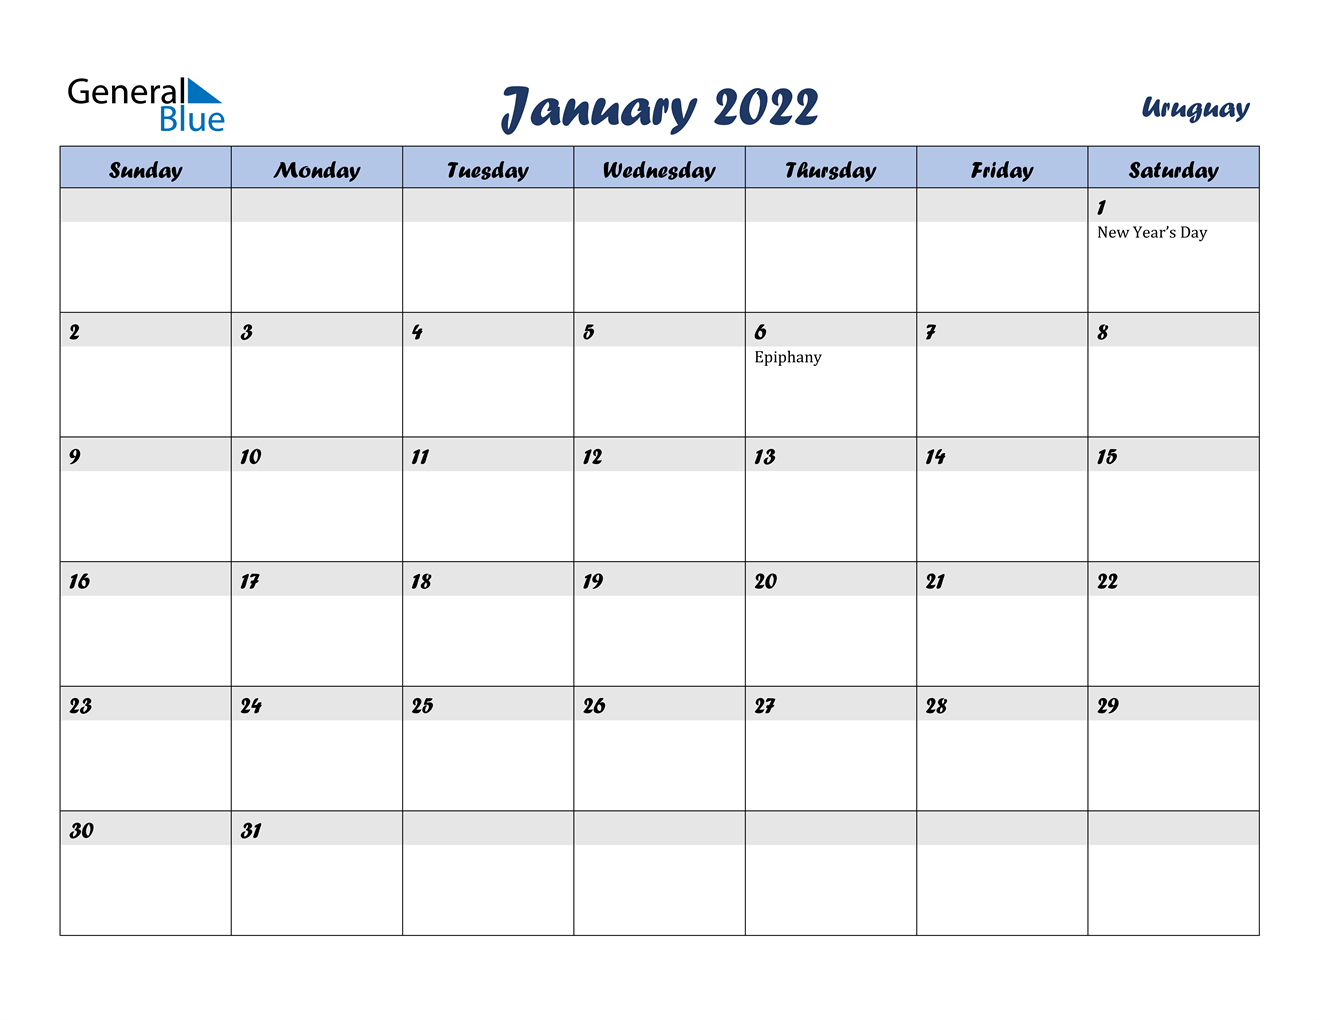 January 2022 Calendar - Uruguay